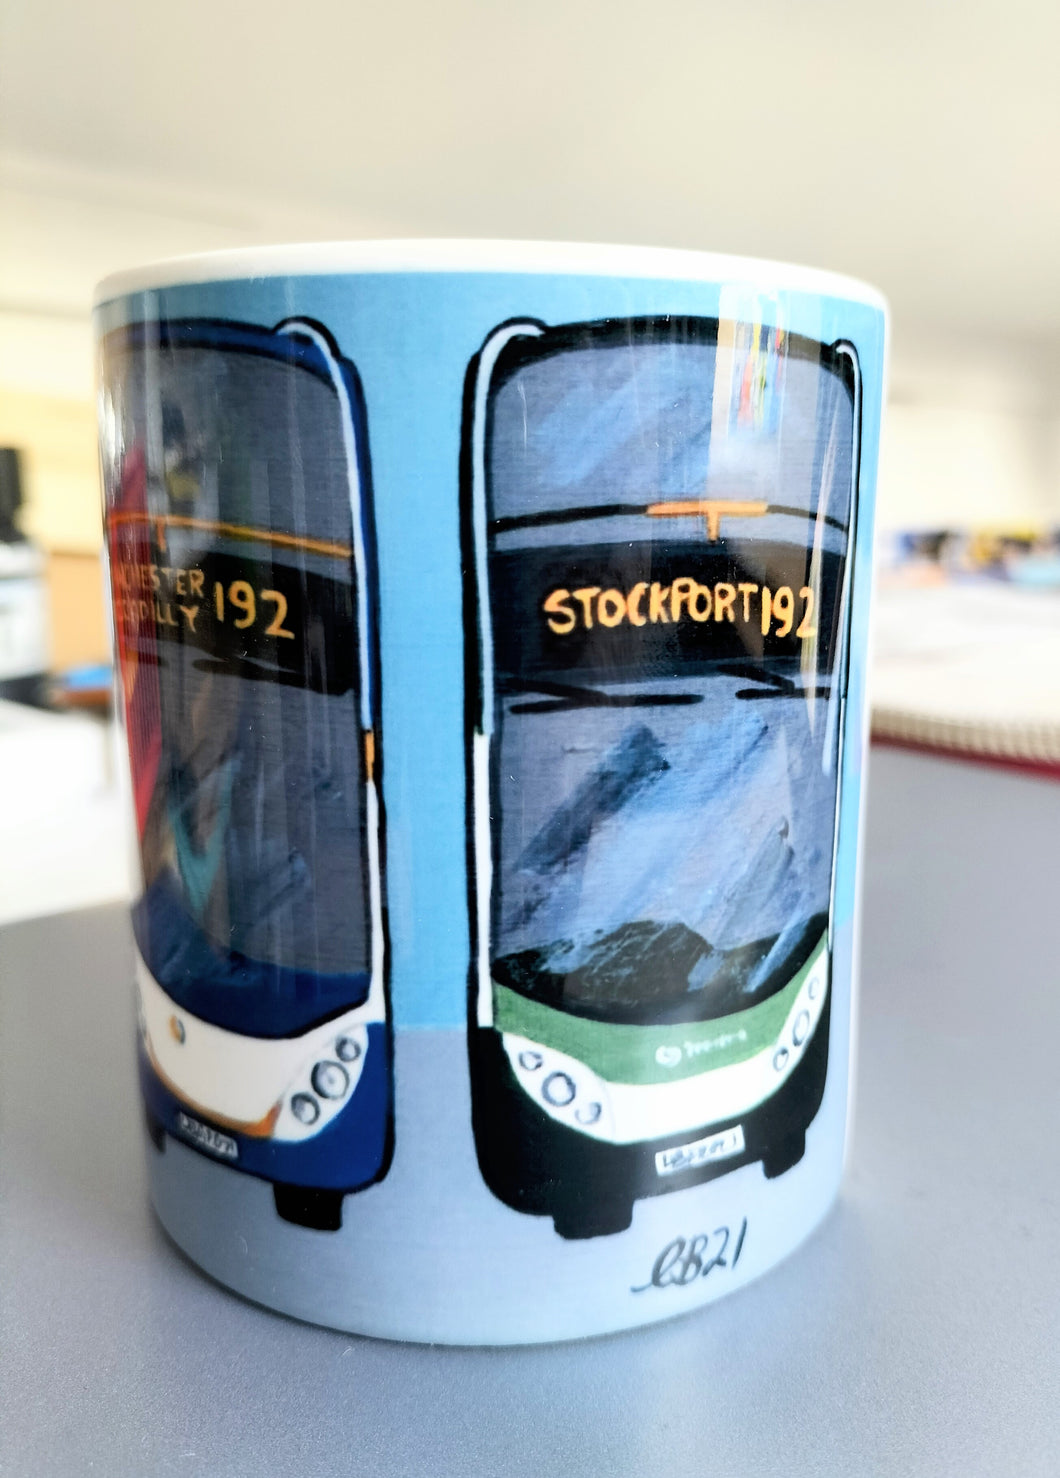 Stockport 192 Bus Mug